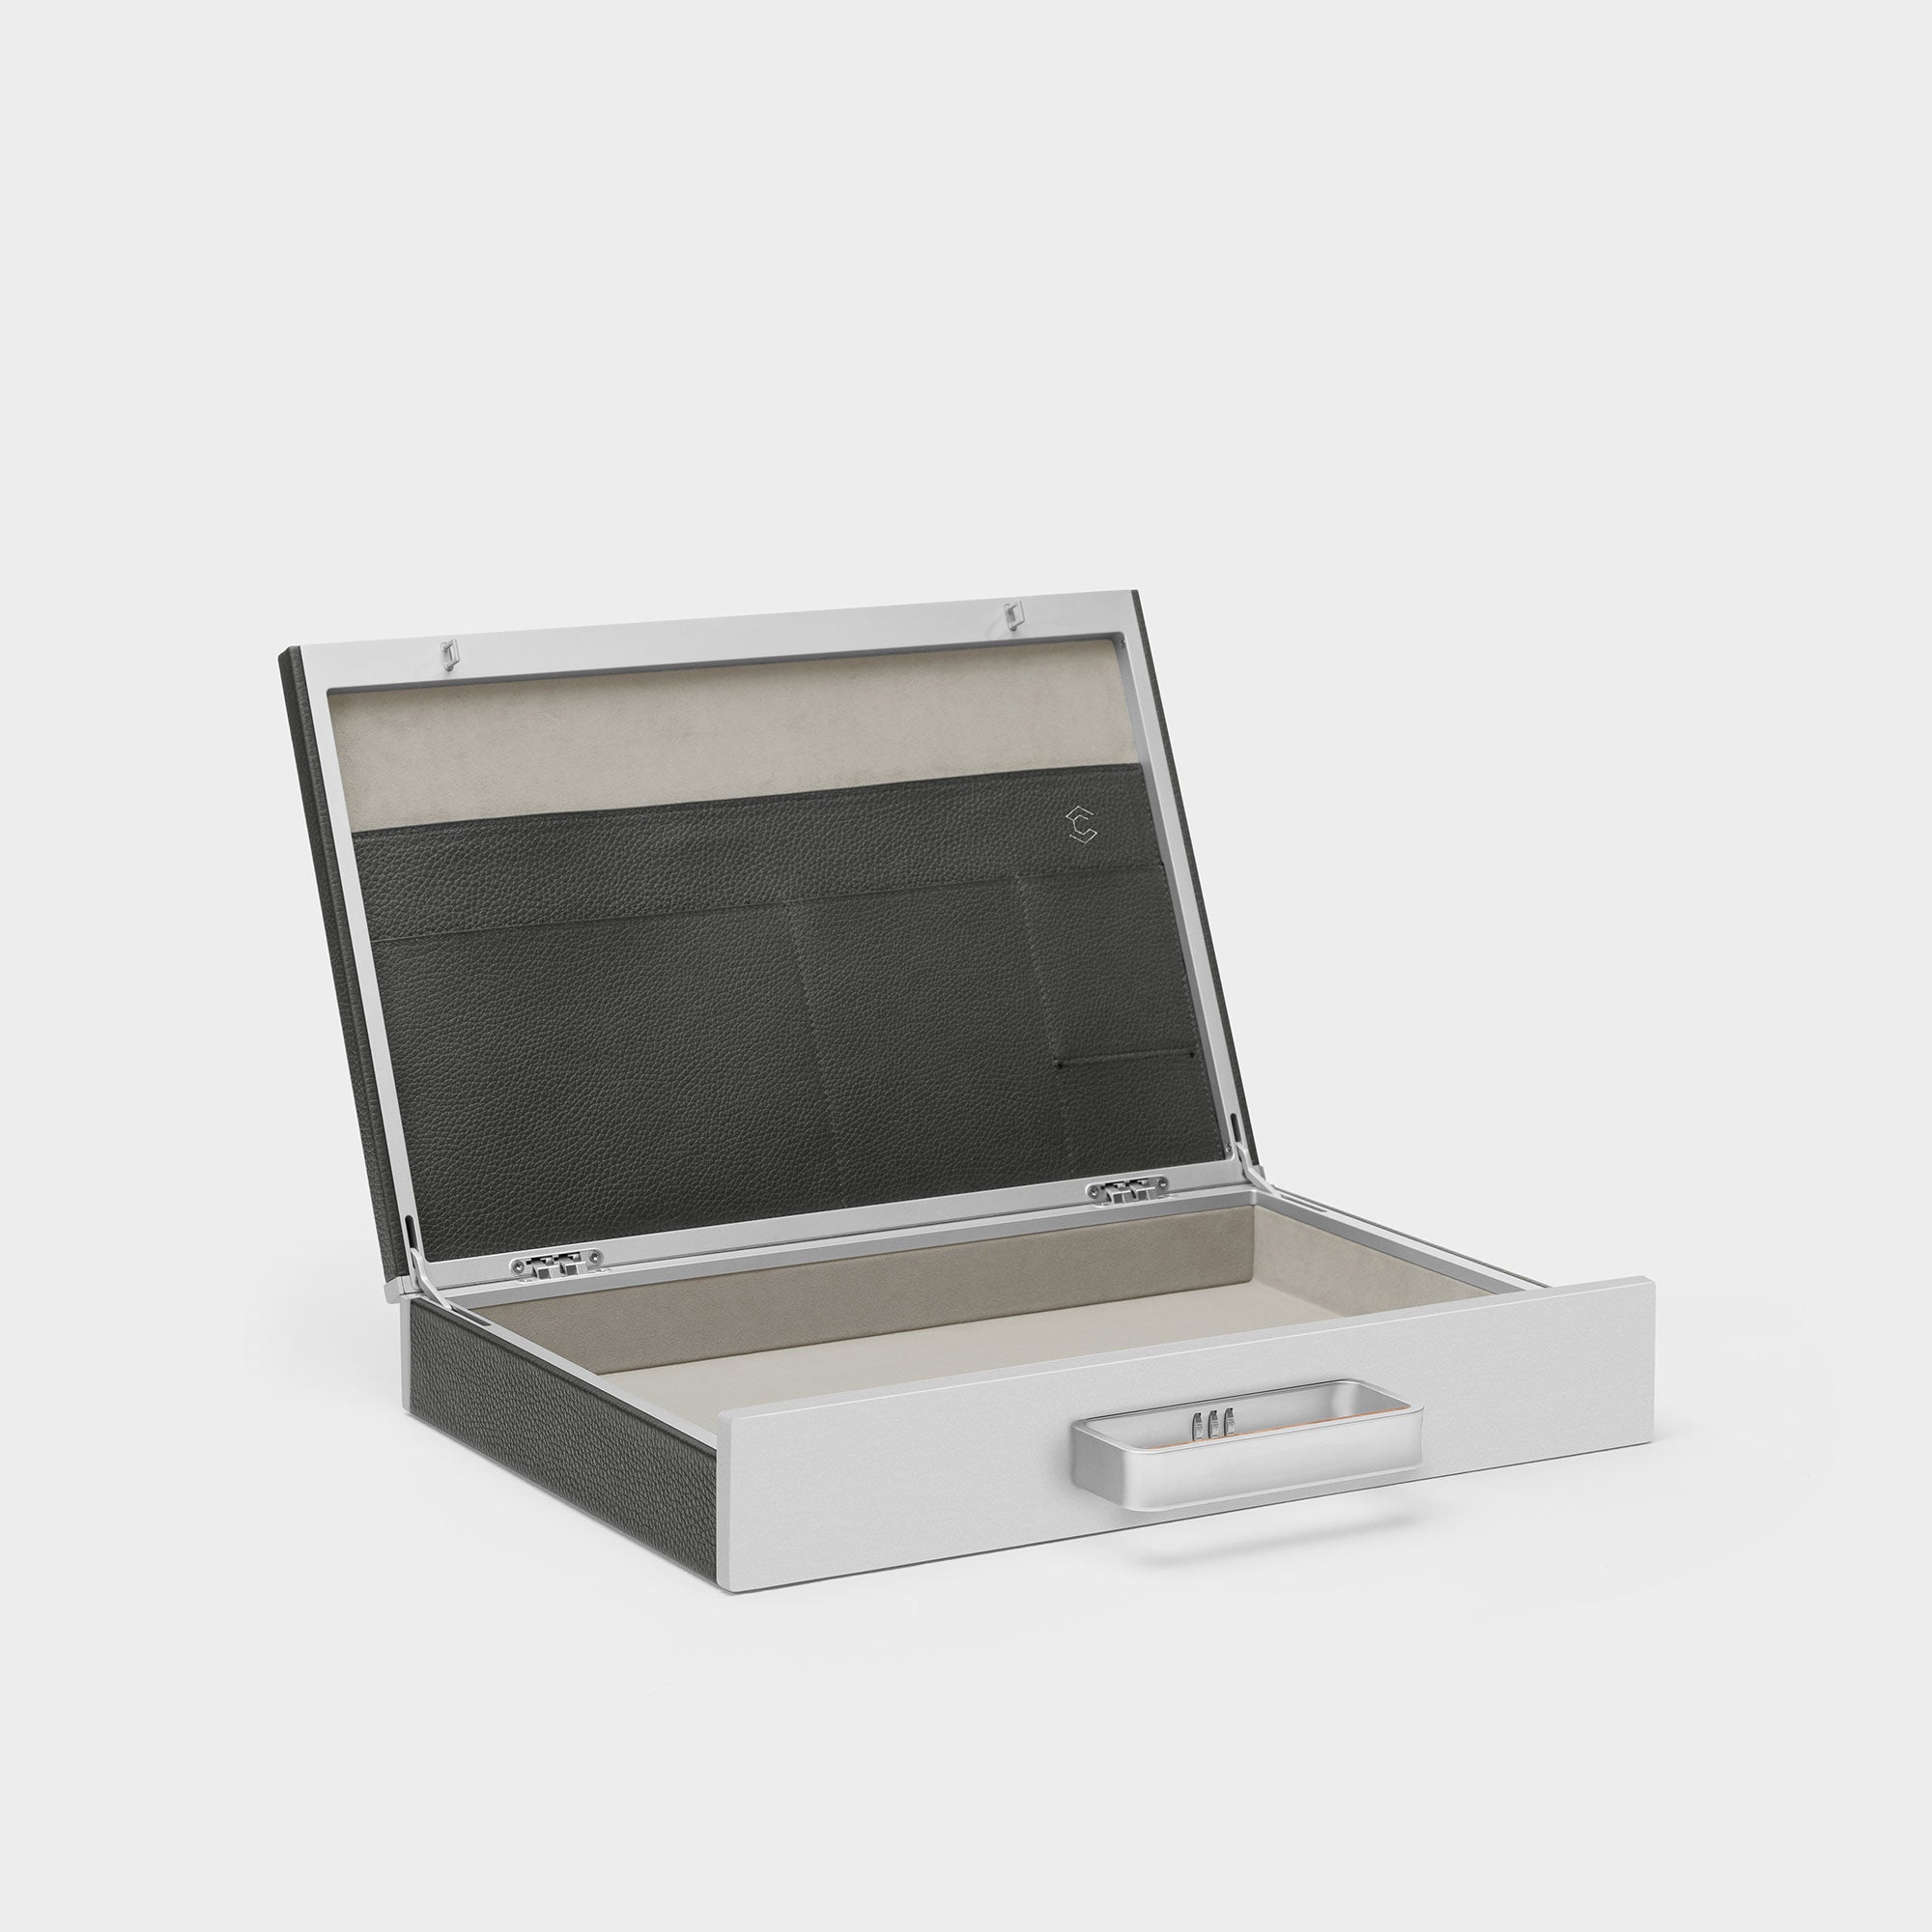 Open Mackenzie briefcase in graphite with Sea sand Alcantara interior with wooden handle